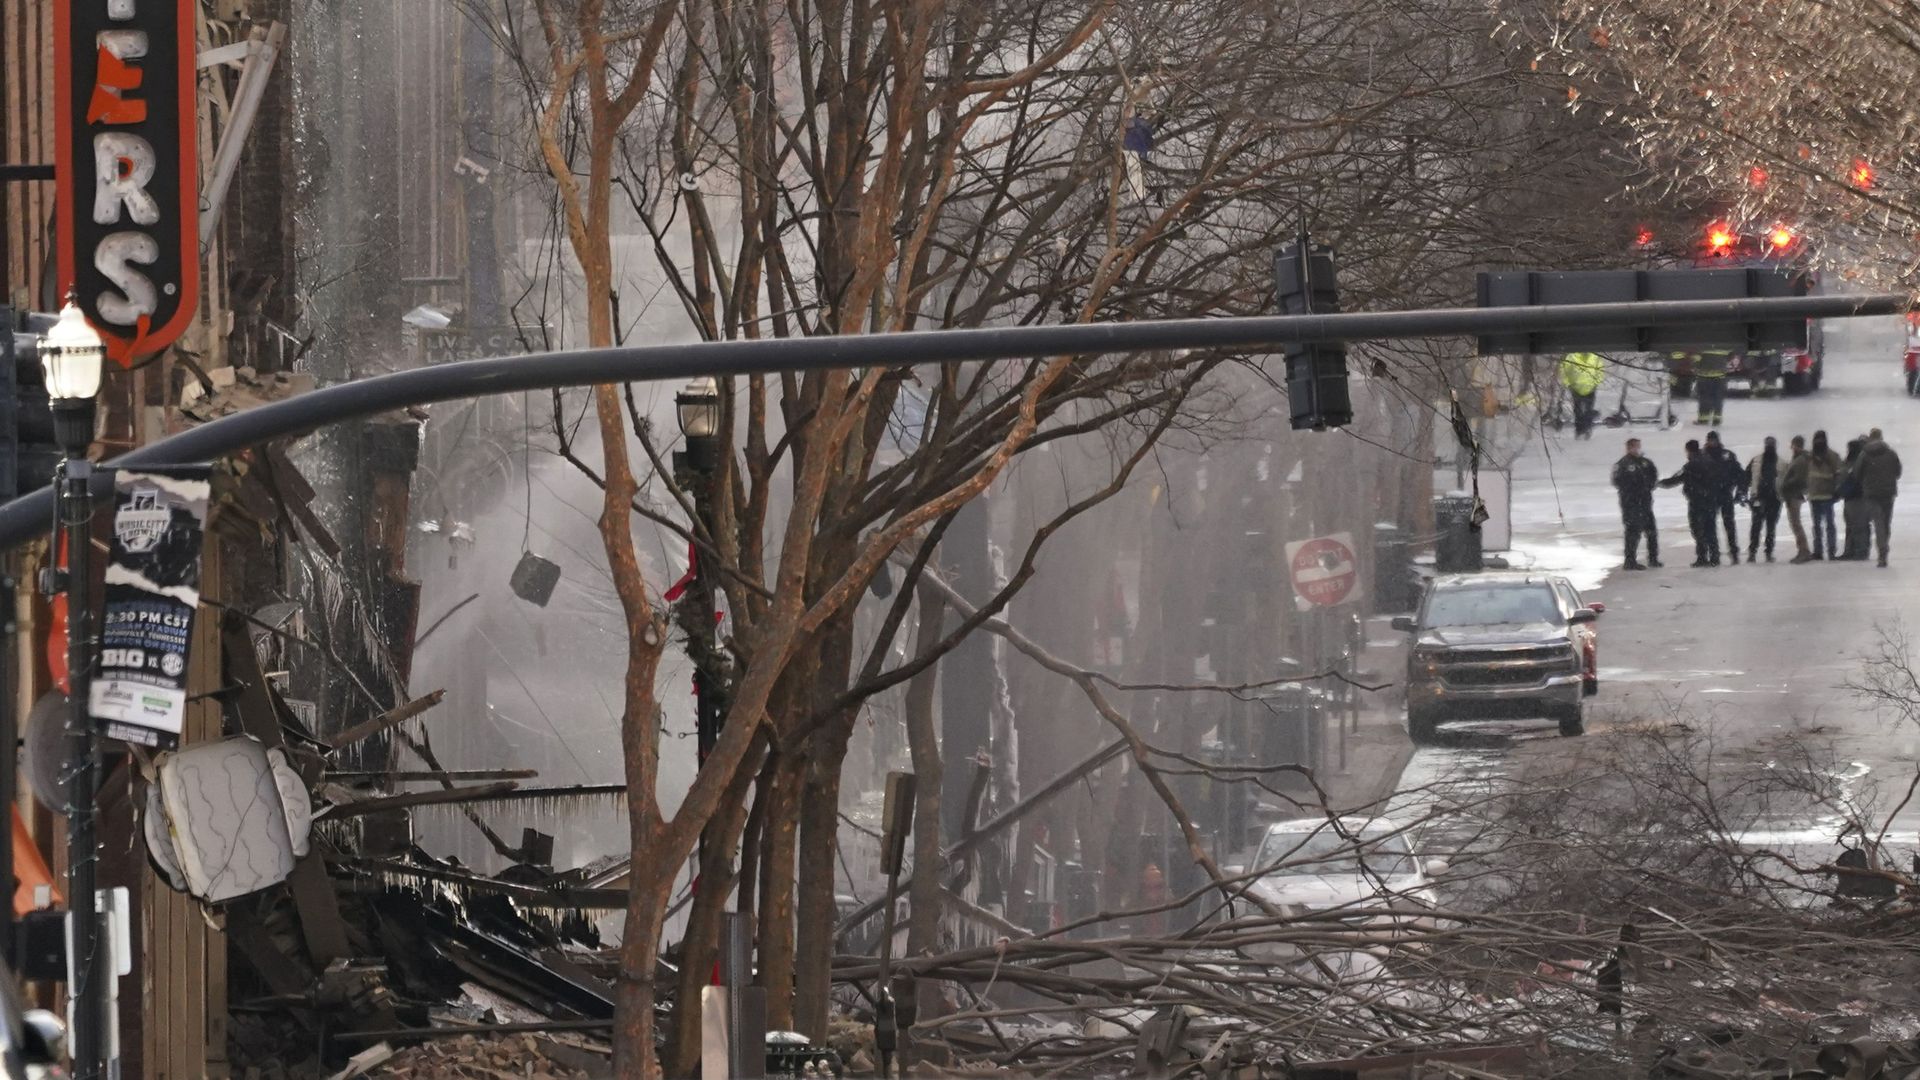 Nashville following the explosion.